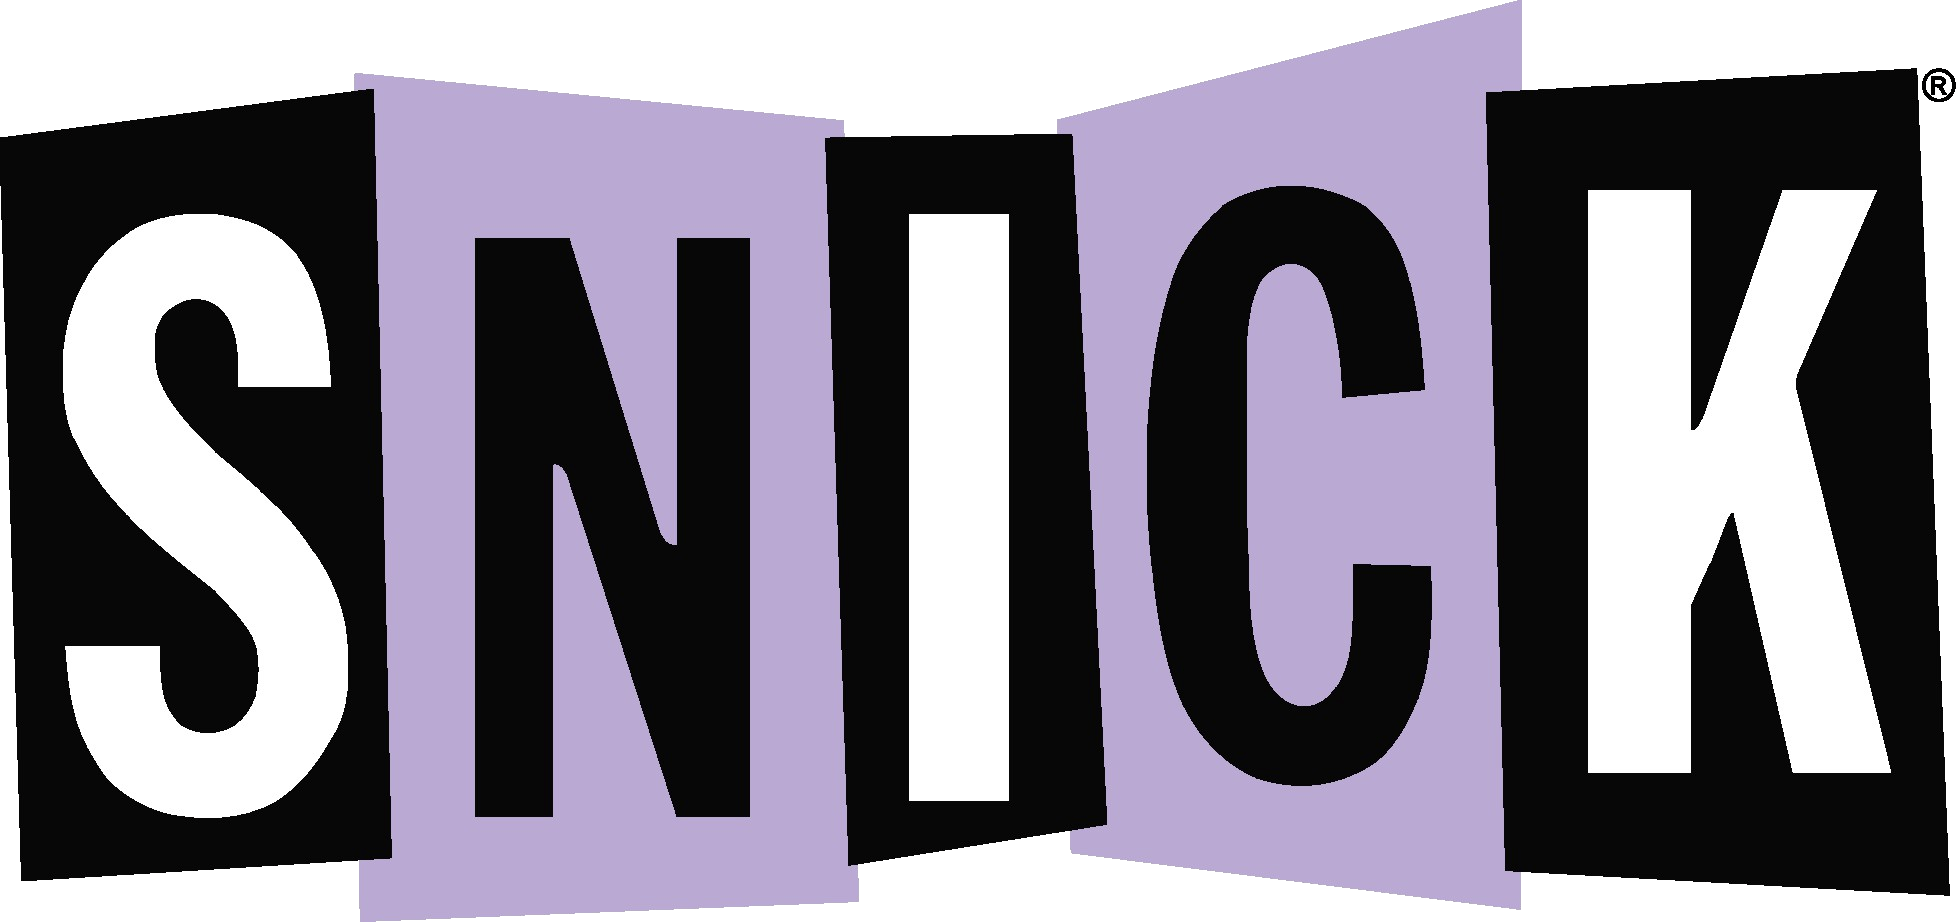 Old Nicktoons Logo - SNICK | Nickelodeon | FANDOM powered by Wikia